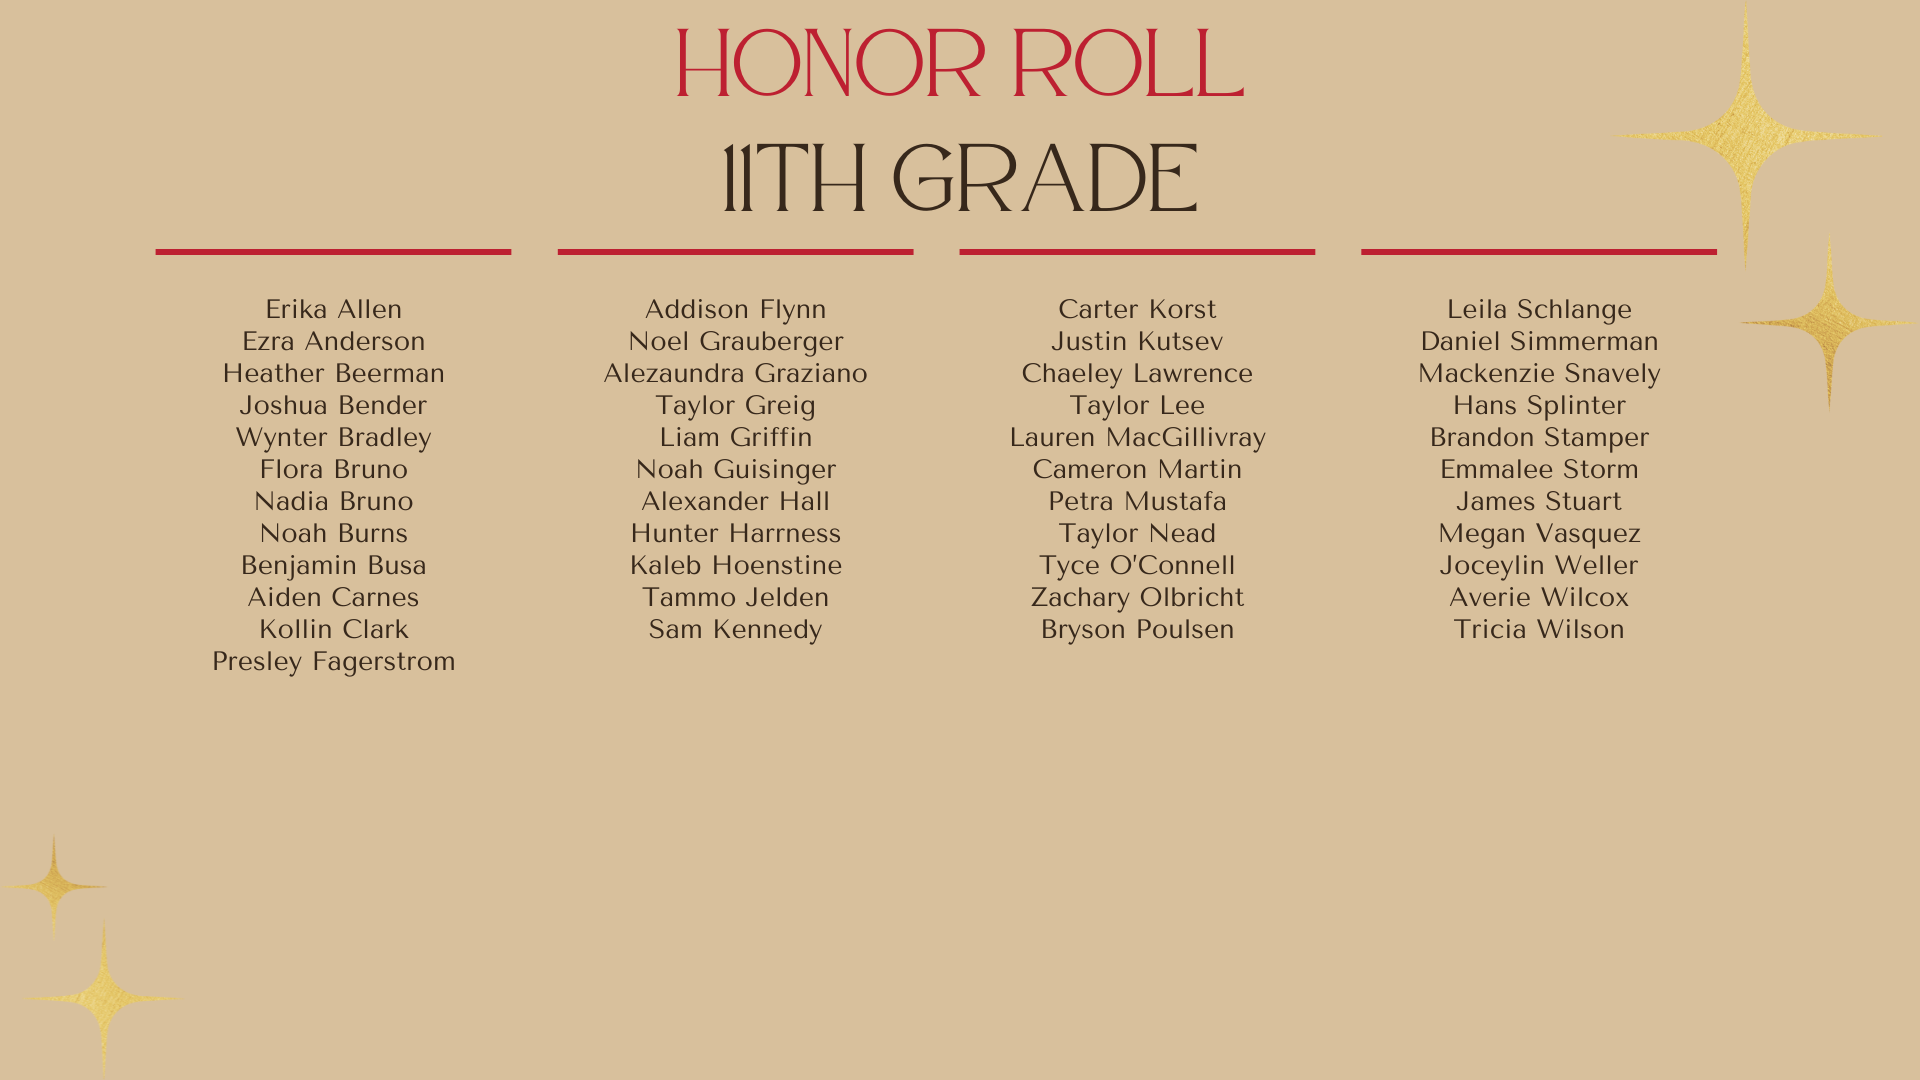 Honor Roll 11th grade